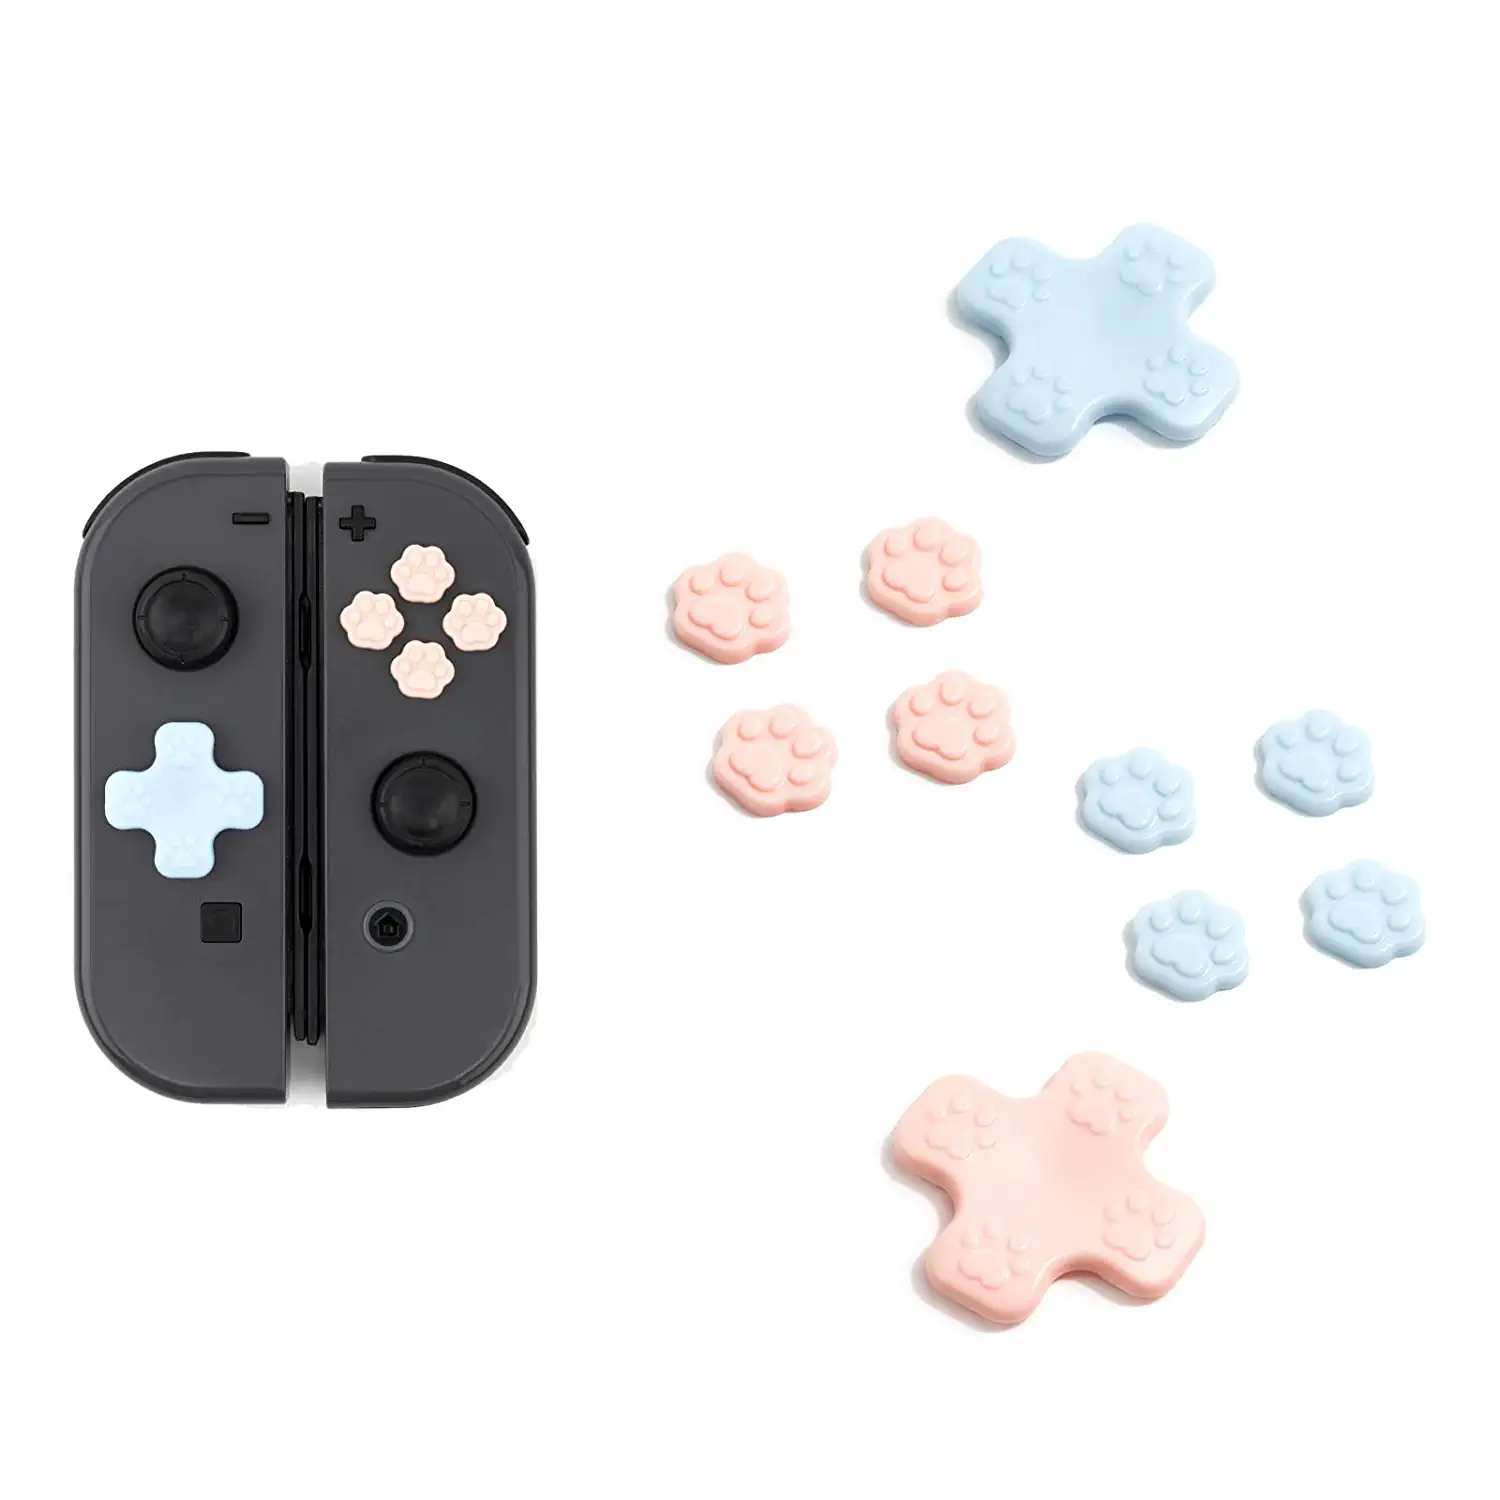 4Pcs Cat Paw Button Caps Joystick Cover Compatible With Nintendo Switch/... - $14.99